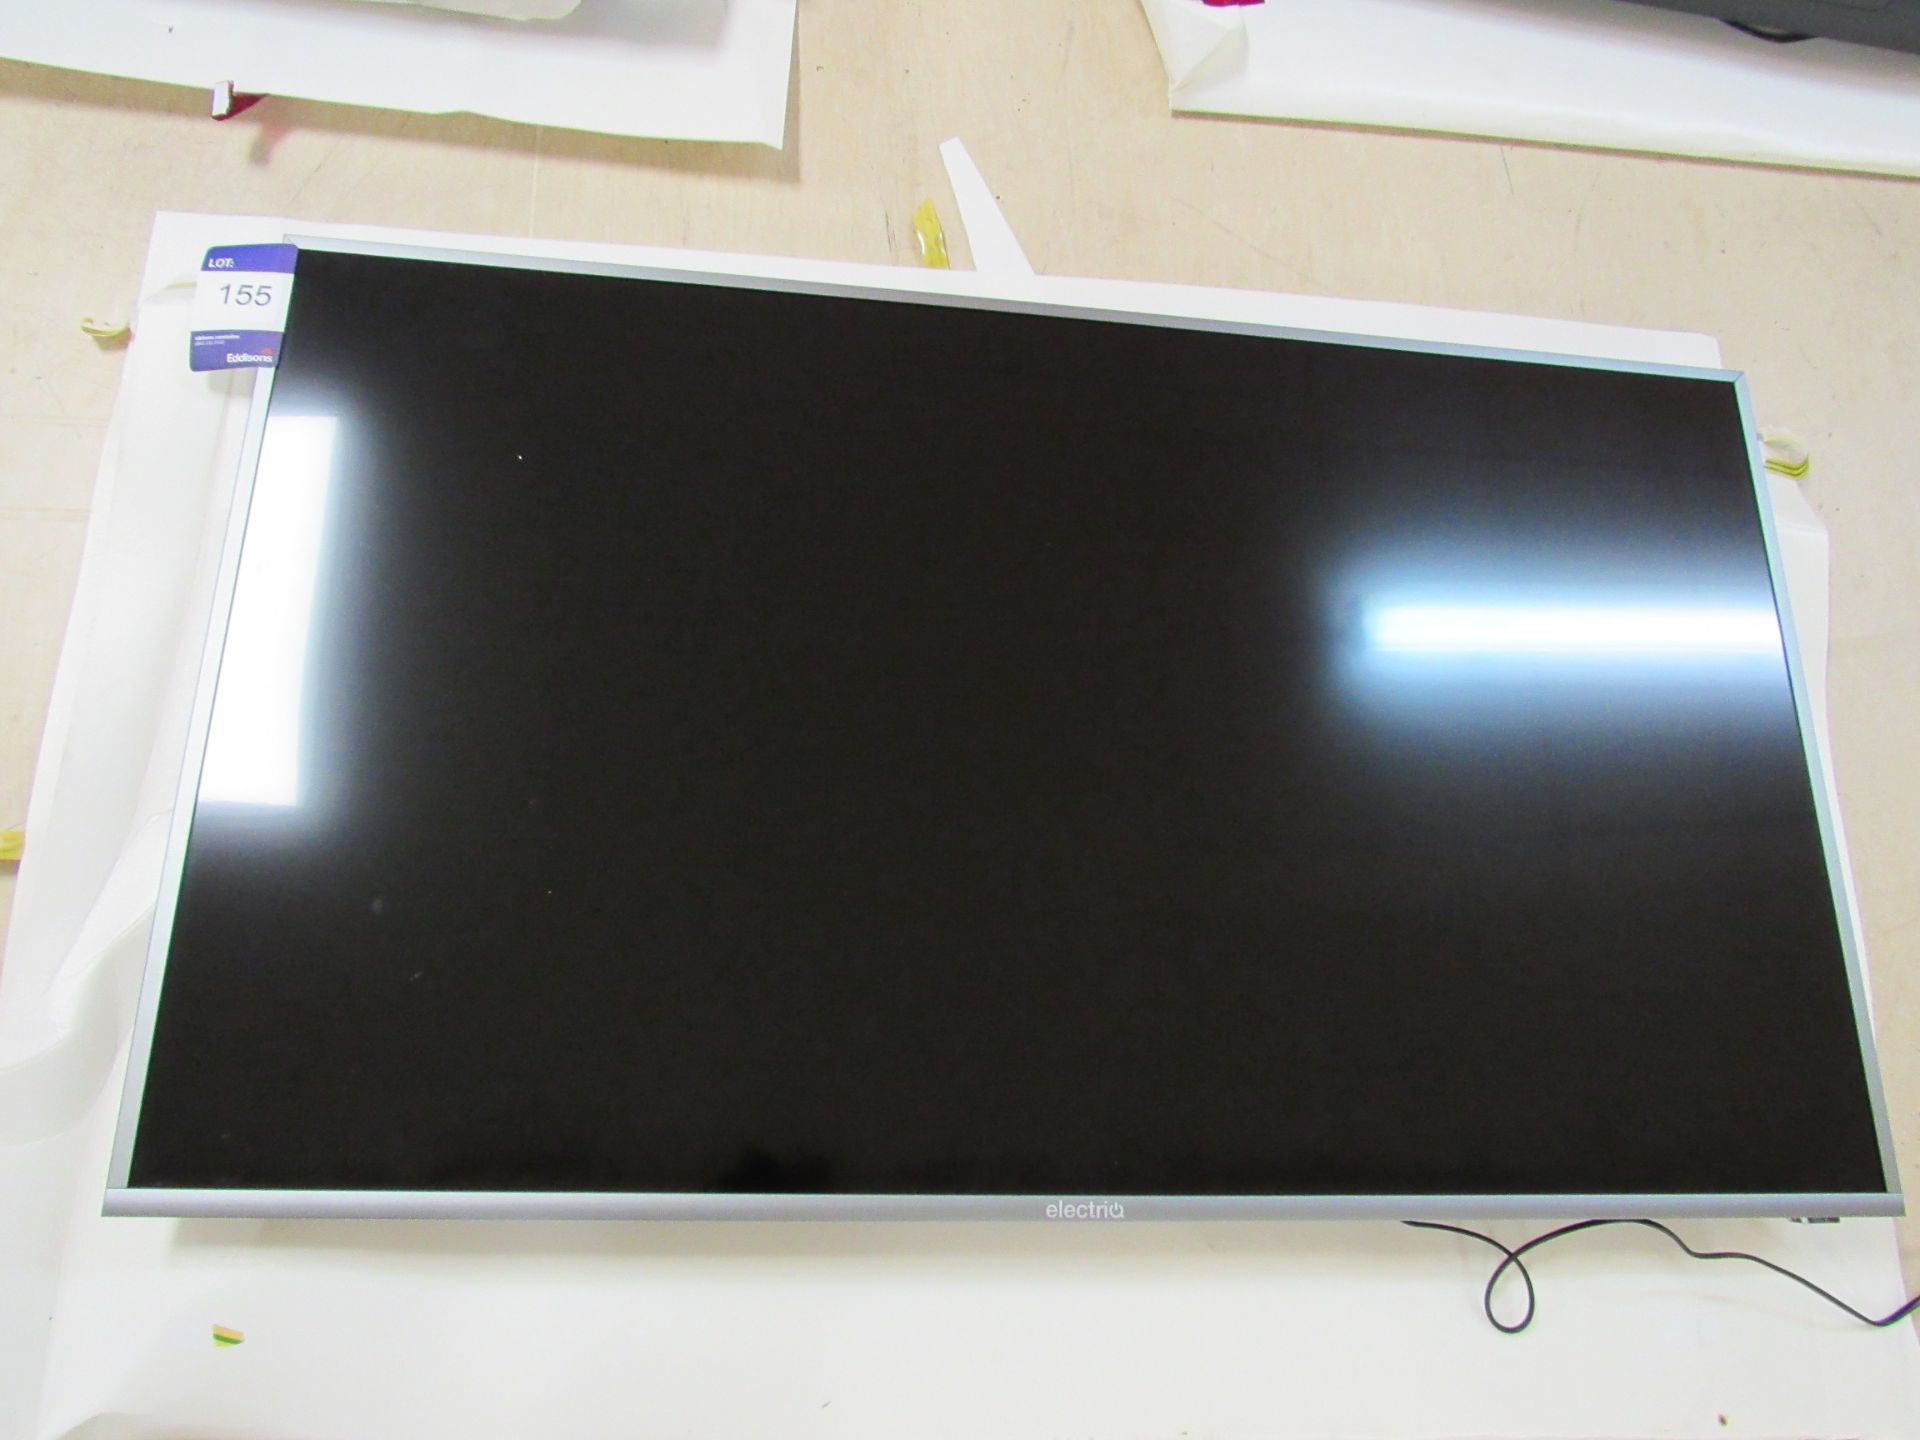 Electric eiq – SV50UHDT25M 50” LED TV